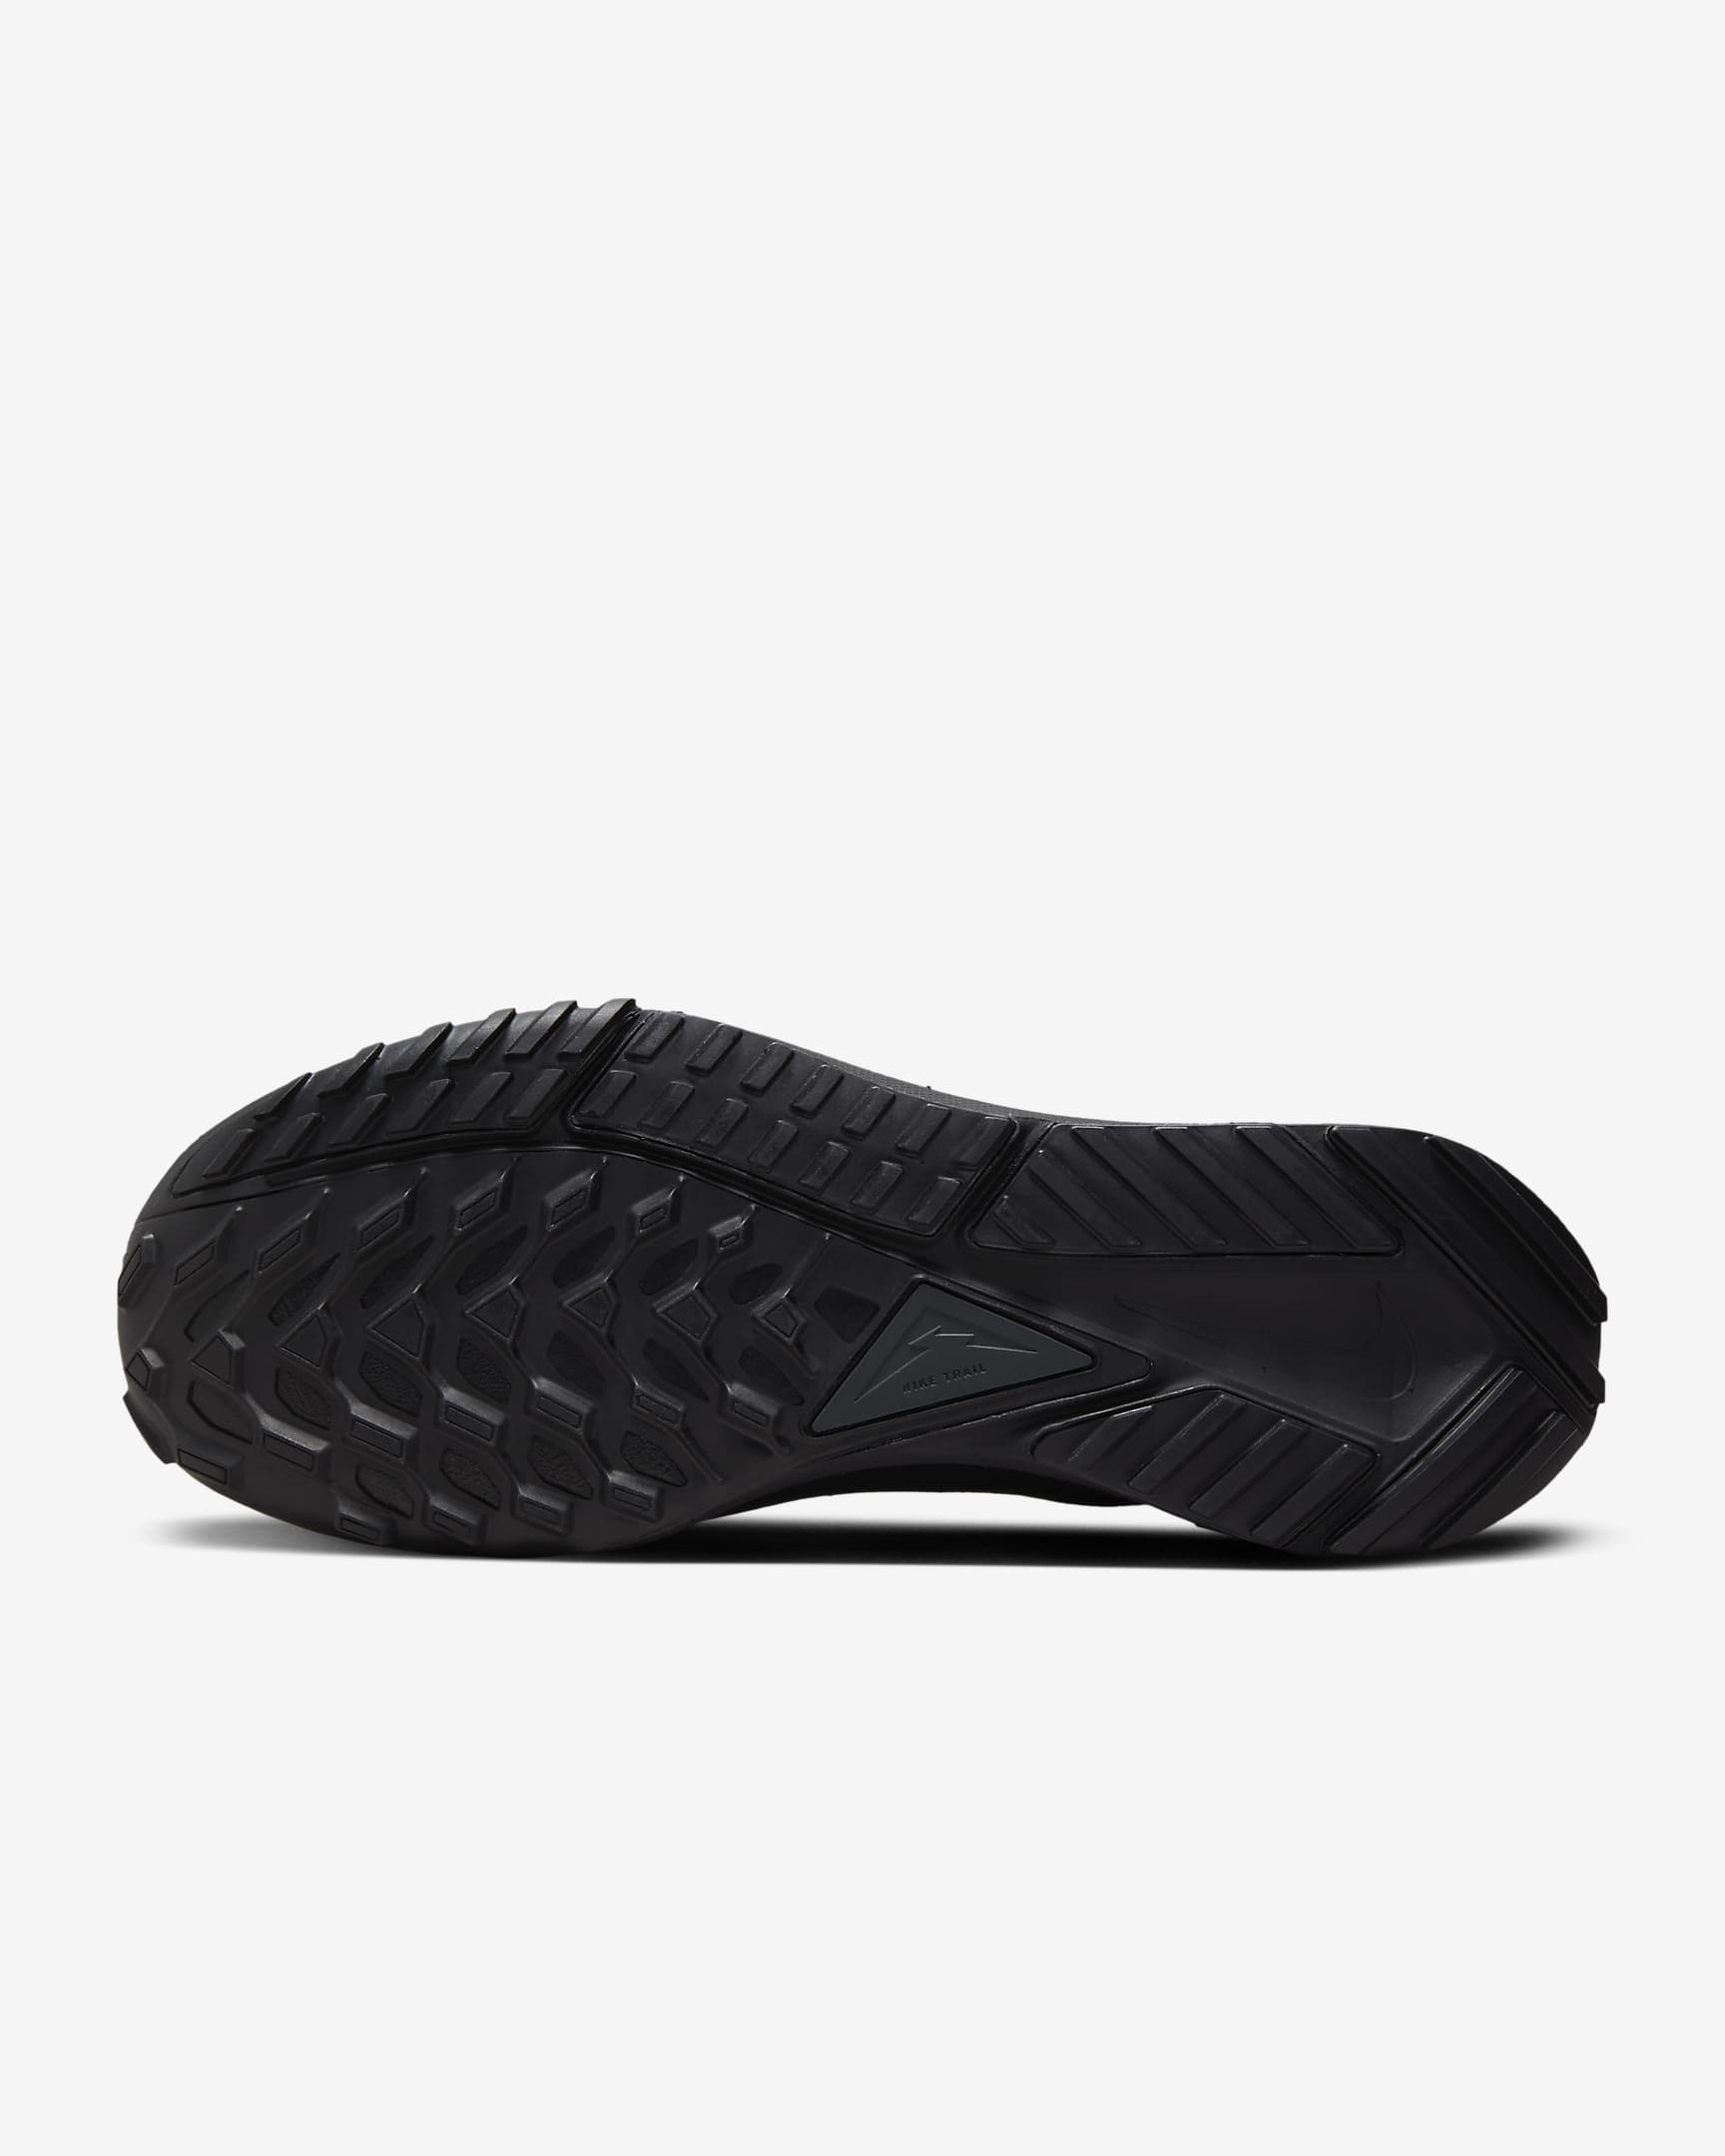 Nike Pegasus Trail 4 GORE-TEX Men's Waterproof Trail-Running Shoes - Black/Velvet Brown/Anthracite